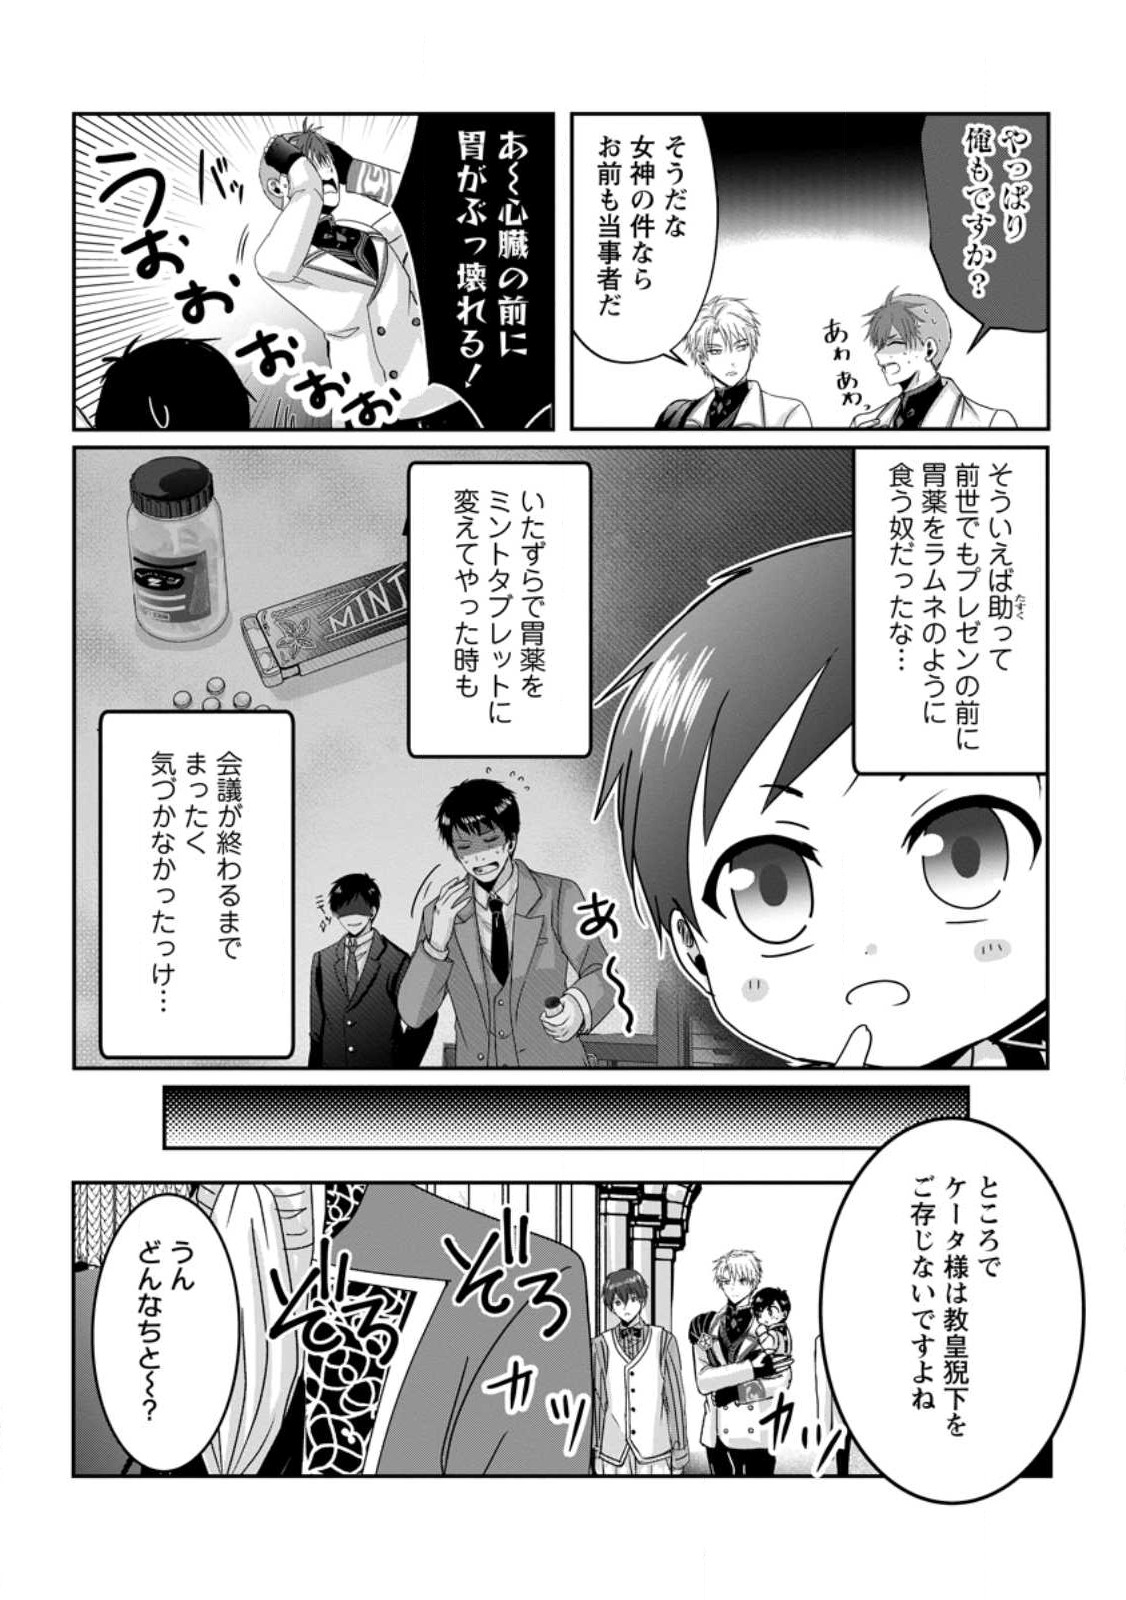 Chittai Ore no Makikomare Isekai Seikatsu - Chapter 8.1 - Page 2